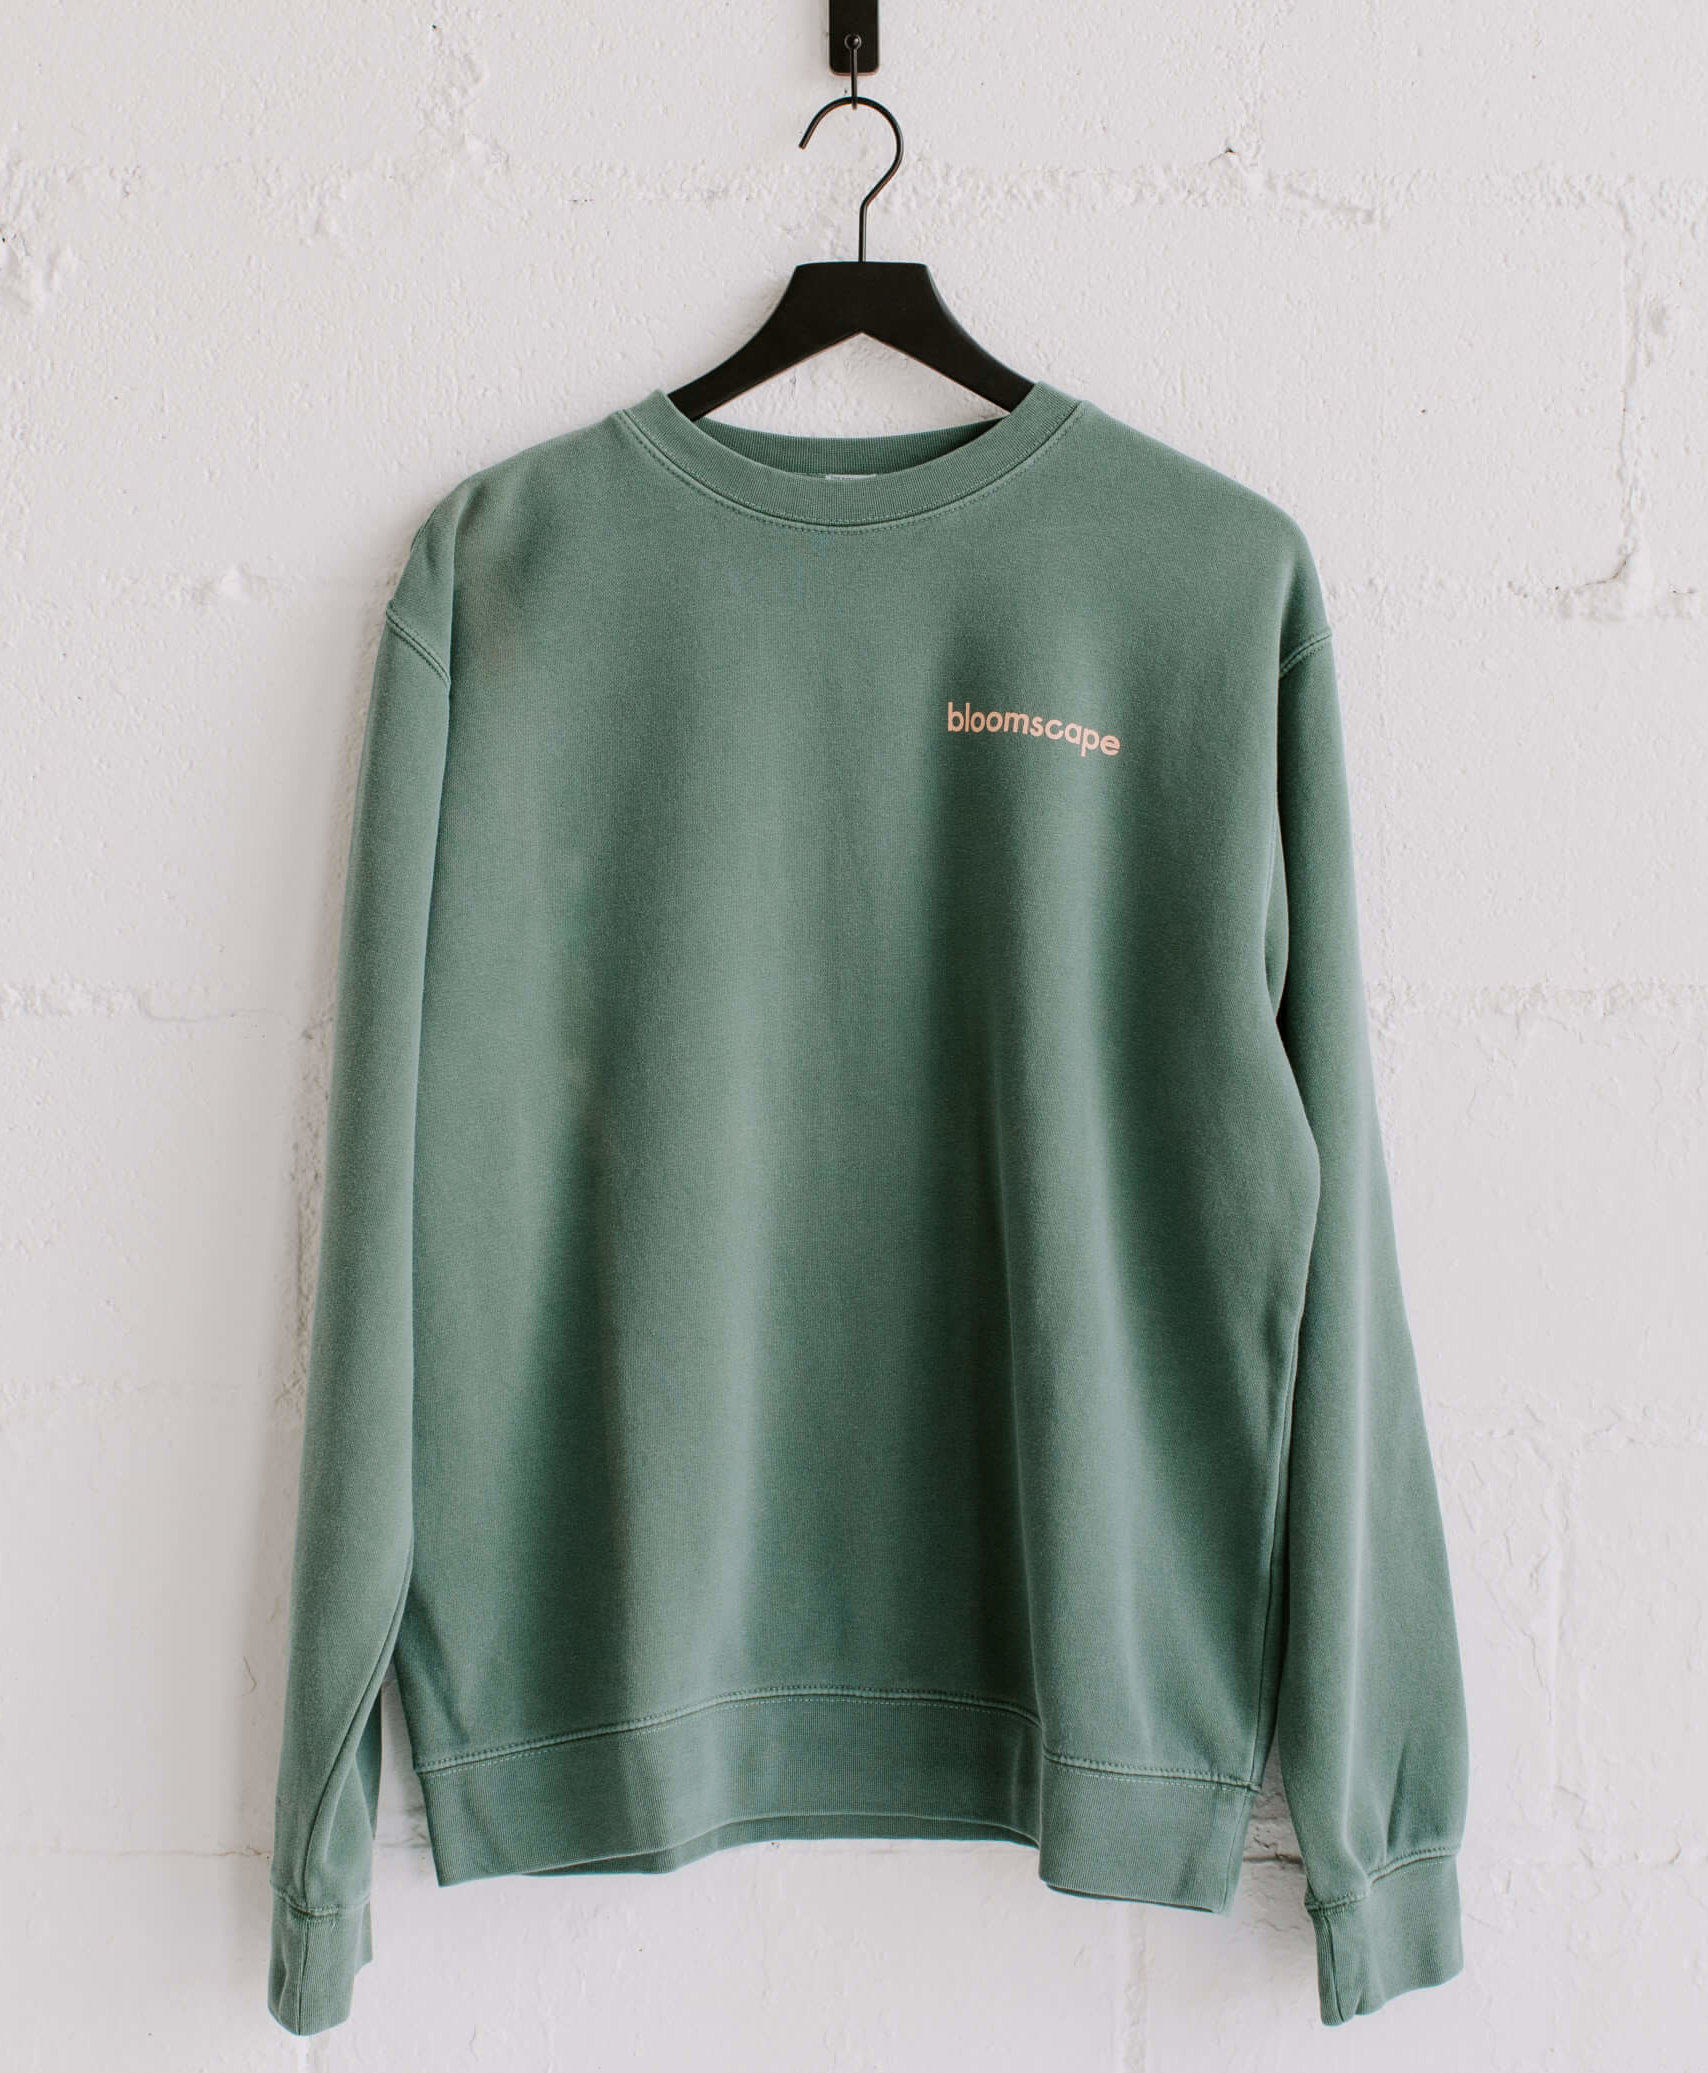 Buy Bloomscape Crewneck Sweatshirt